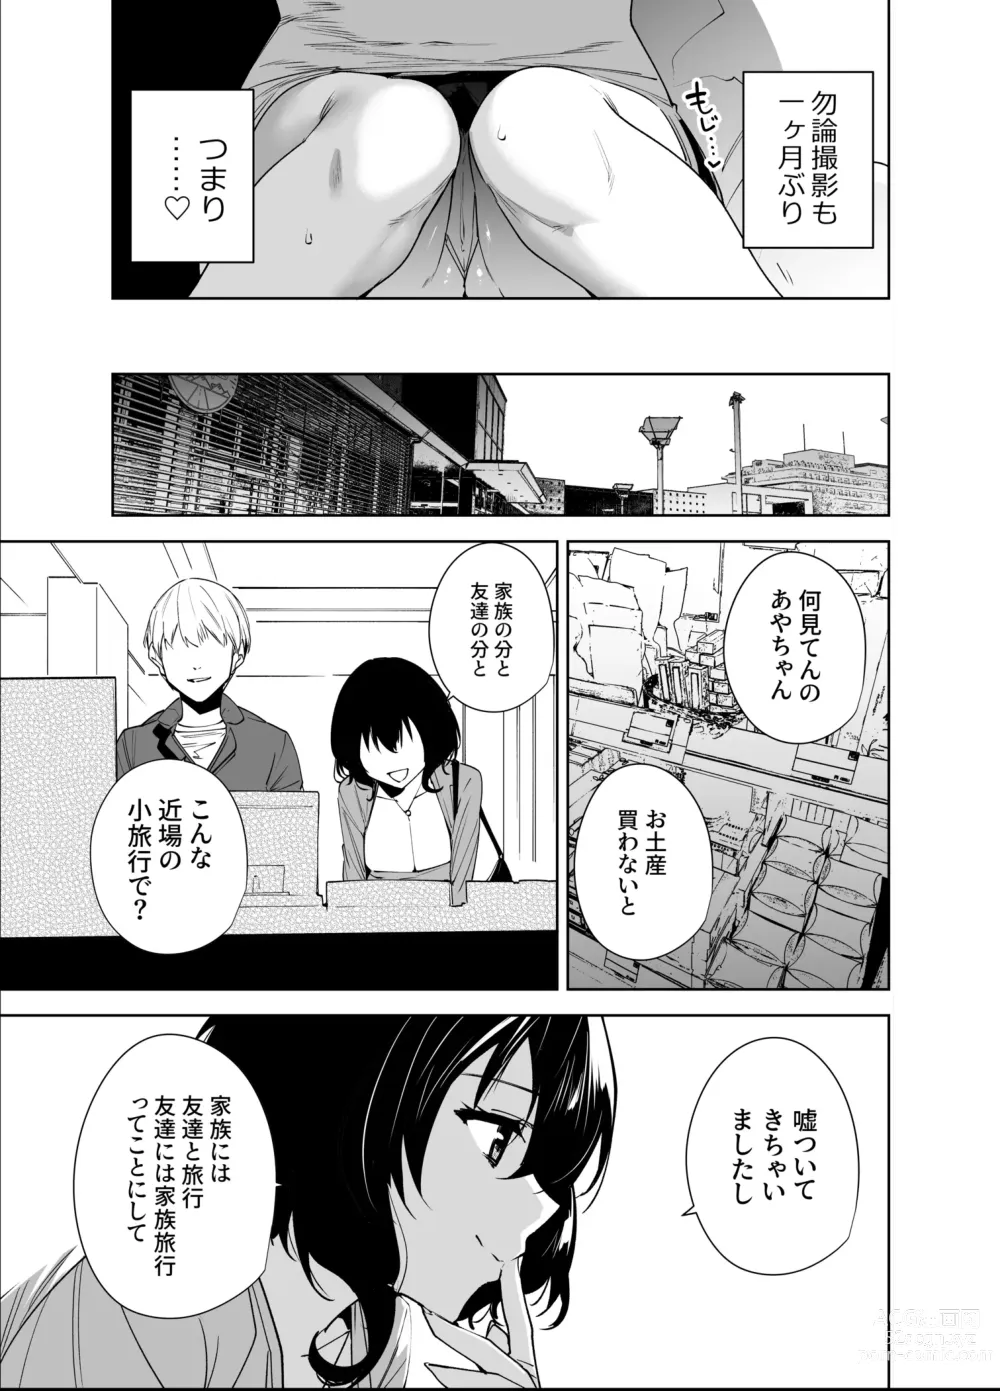 Page 4 of doujinshi Hikoukai Plan 2